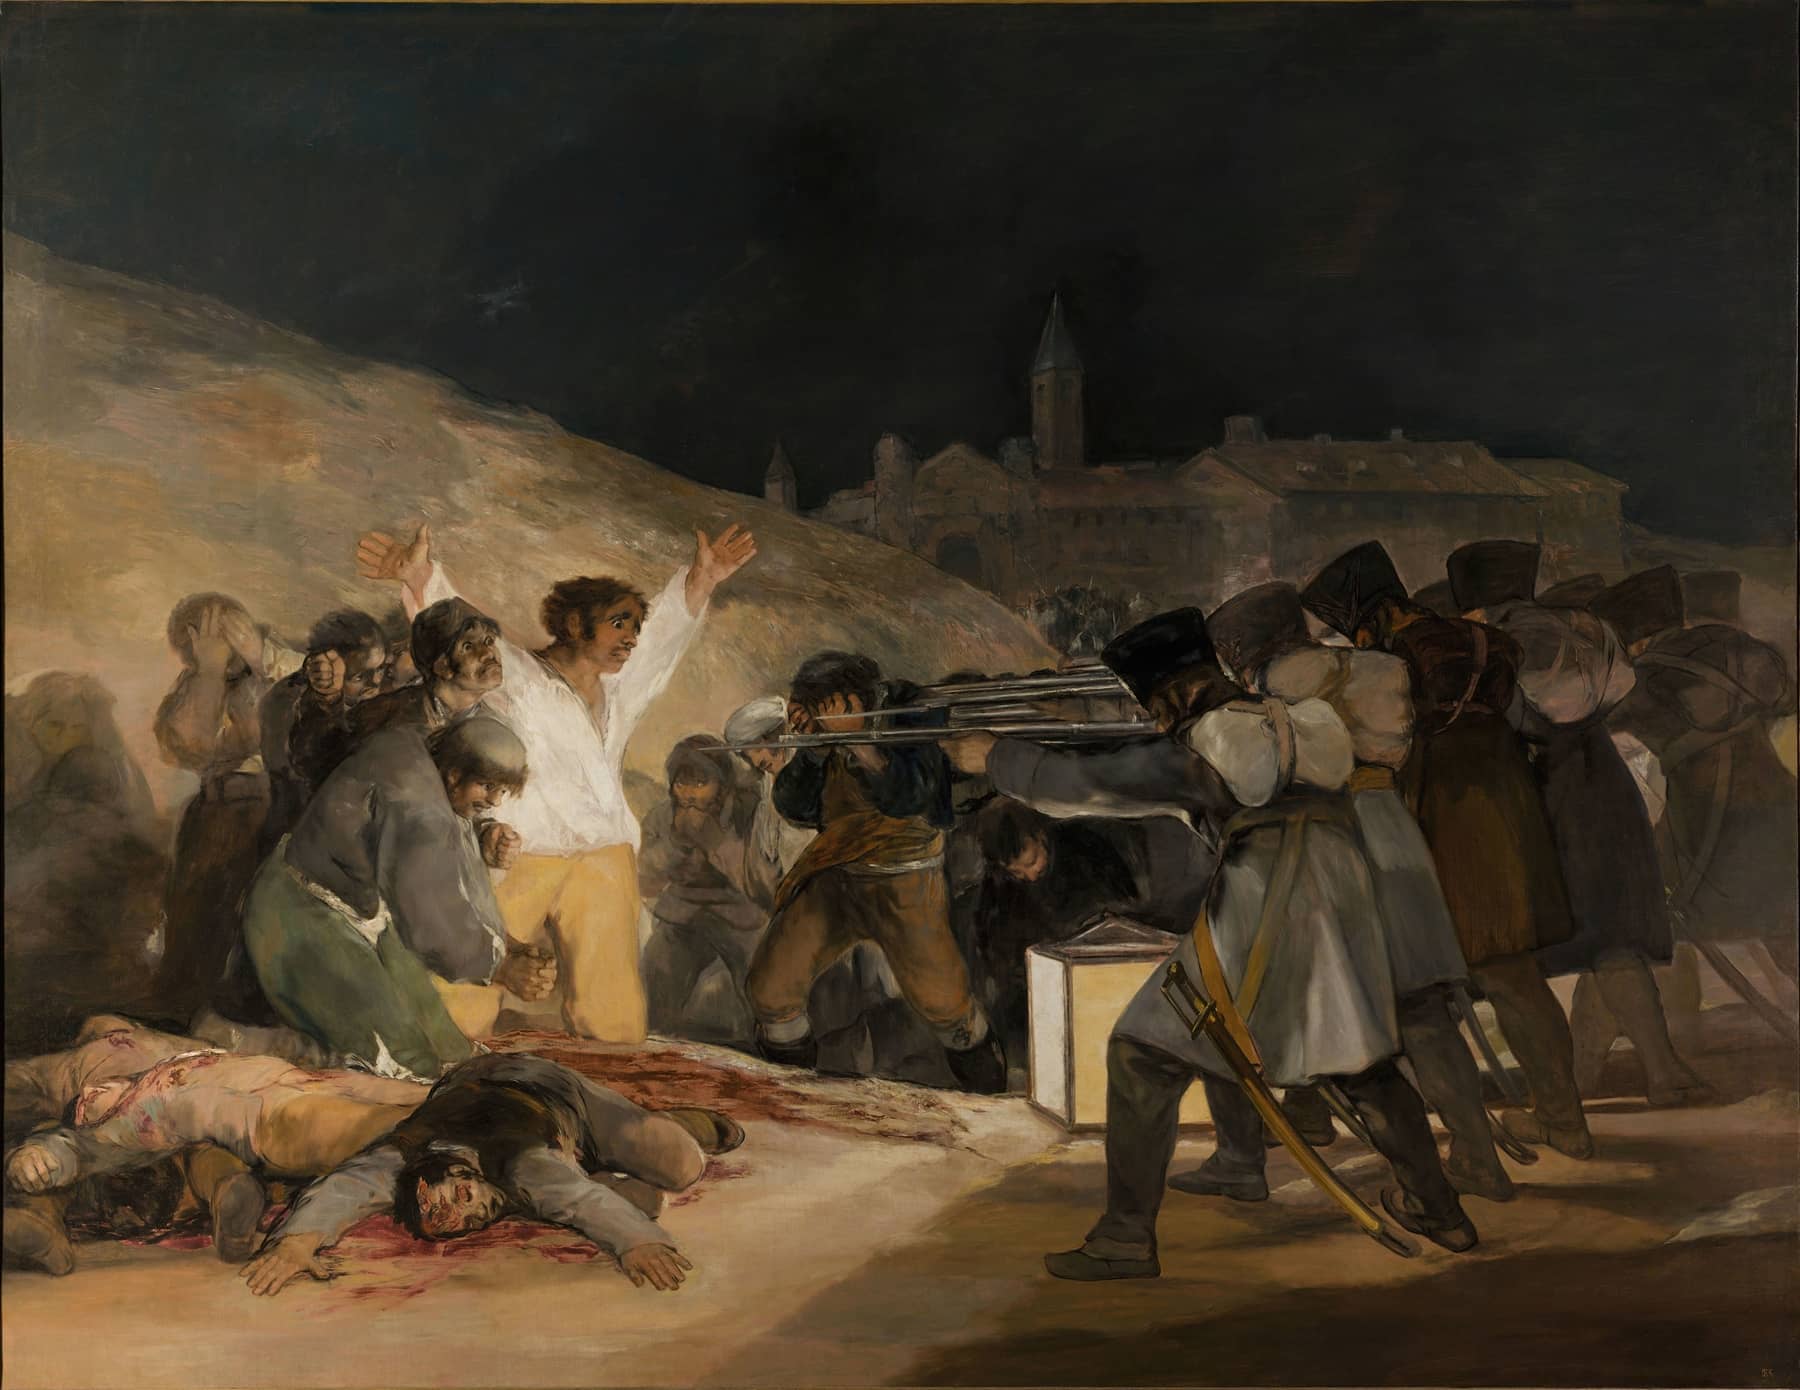 Francisco de Goya, The Third of May 1808 (1814)-1